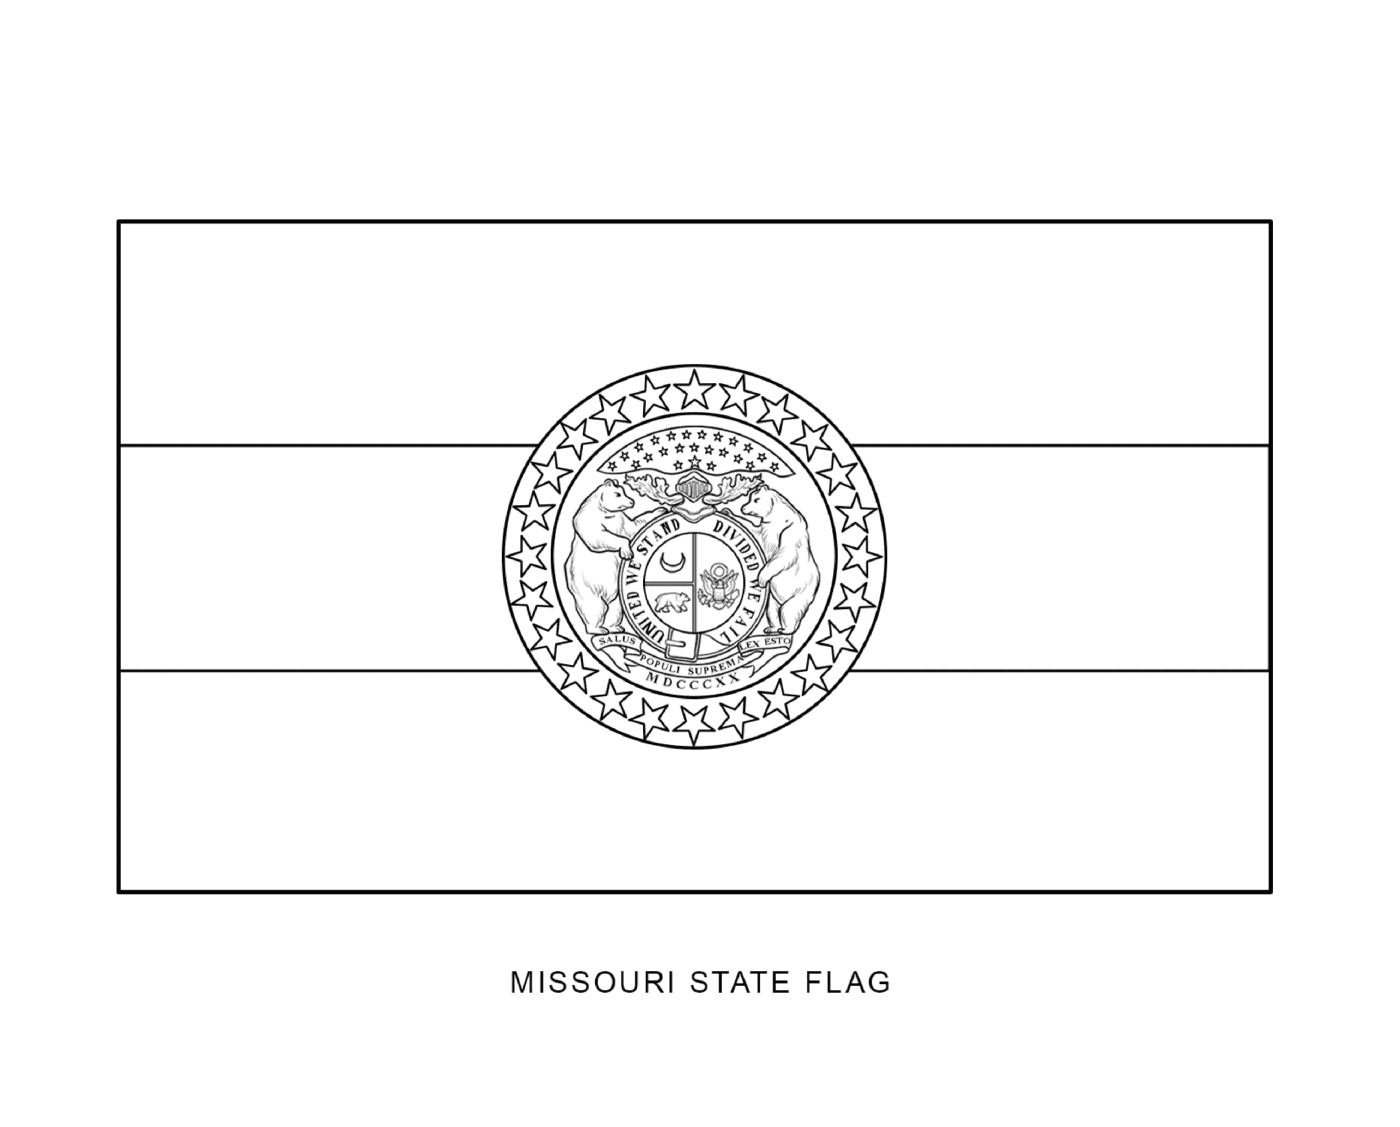  Missouri State flag drawn in black ink 